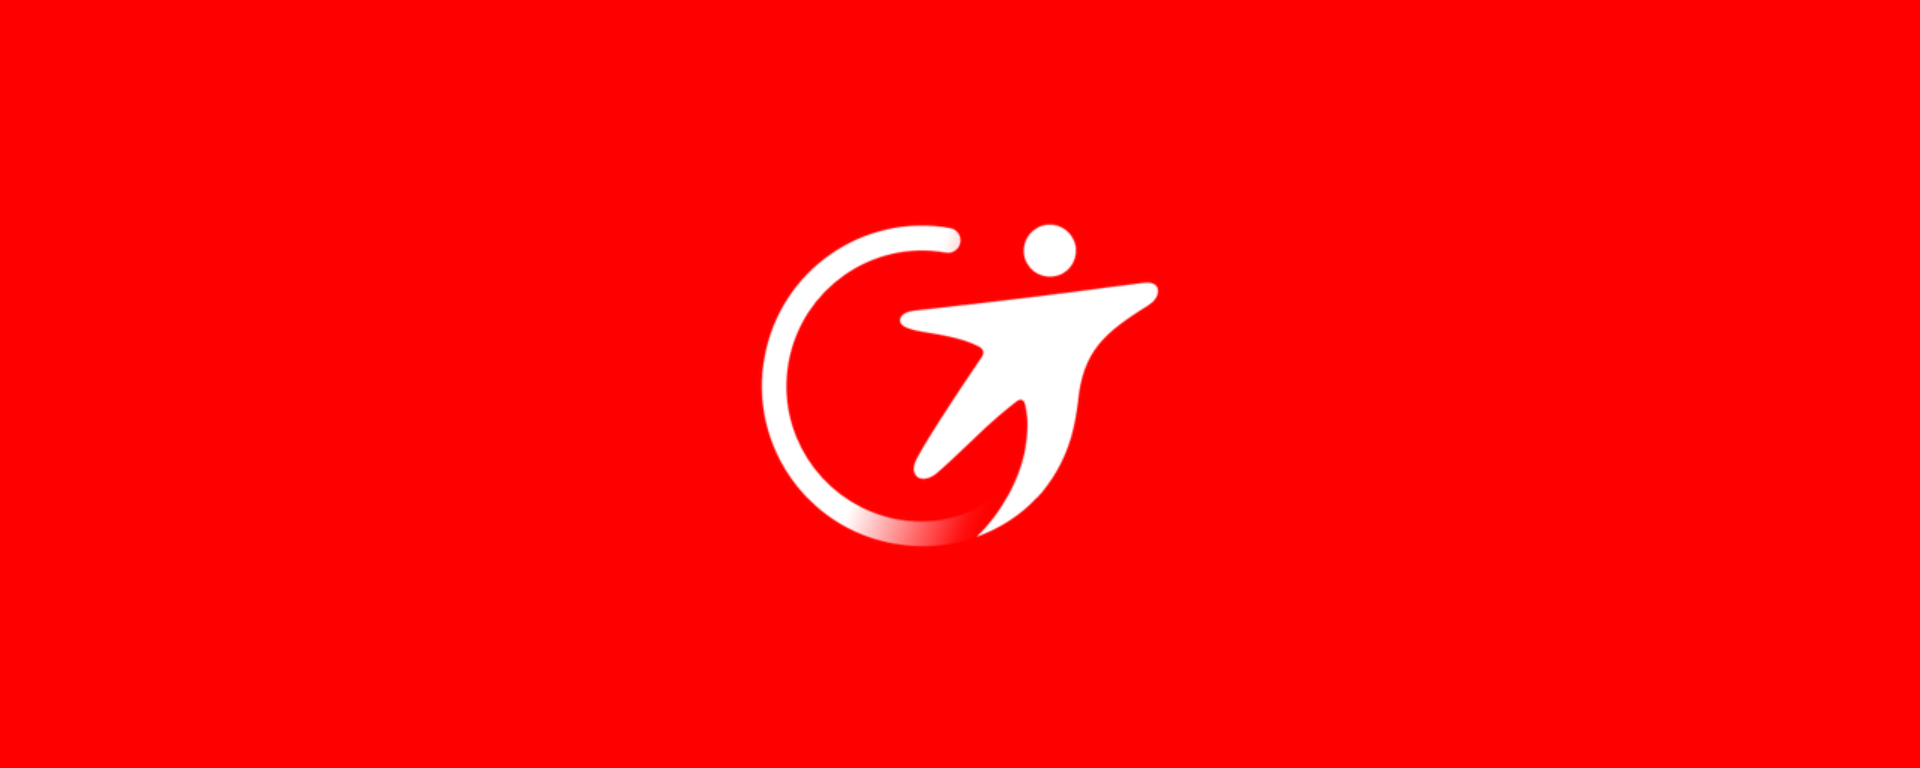 Transdev logo blanc sur fond rouge simple